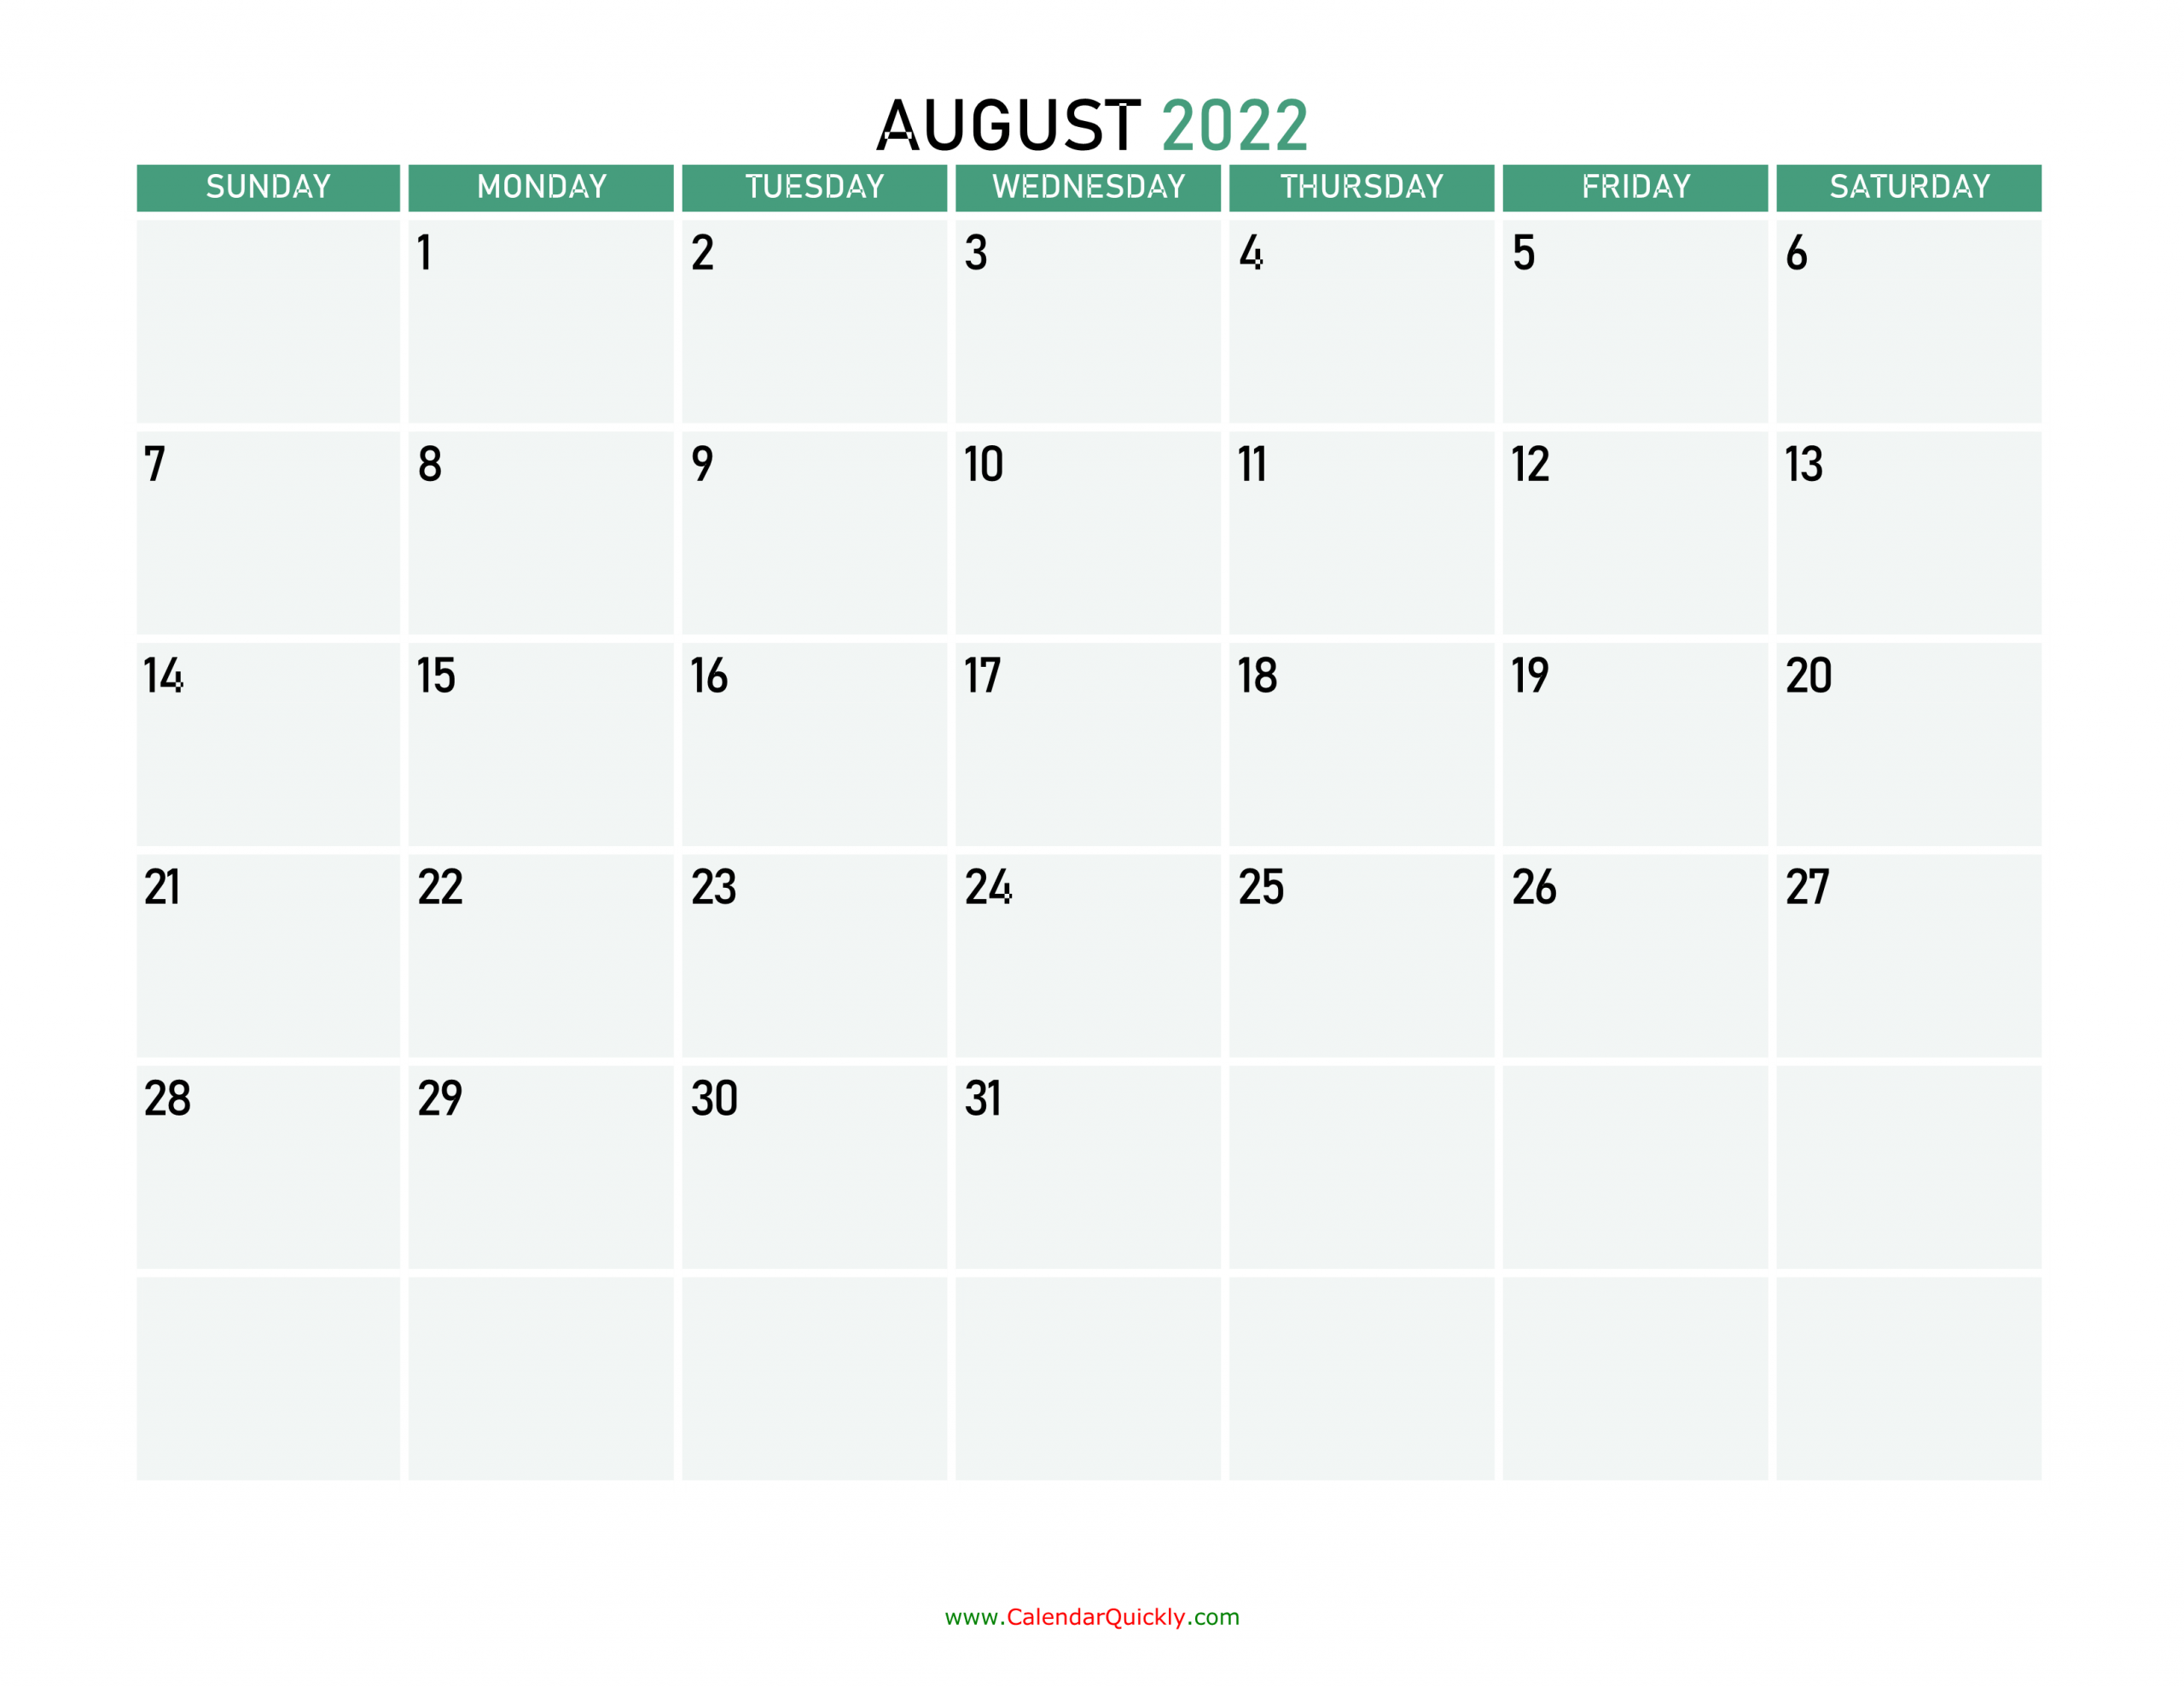 August 2022 Calendars | Calendar Quickly